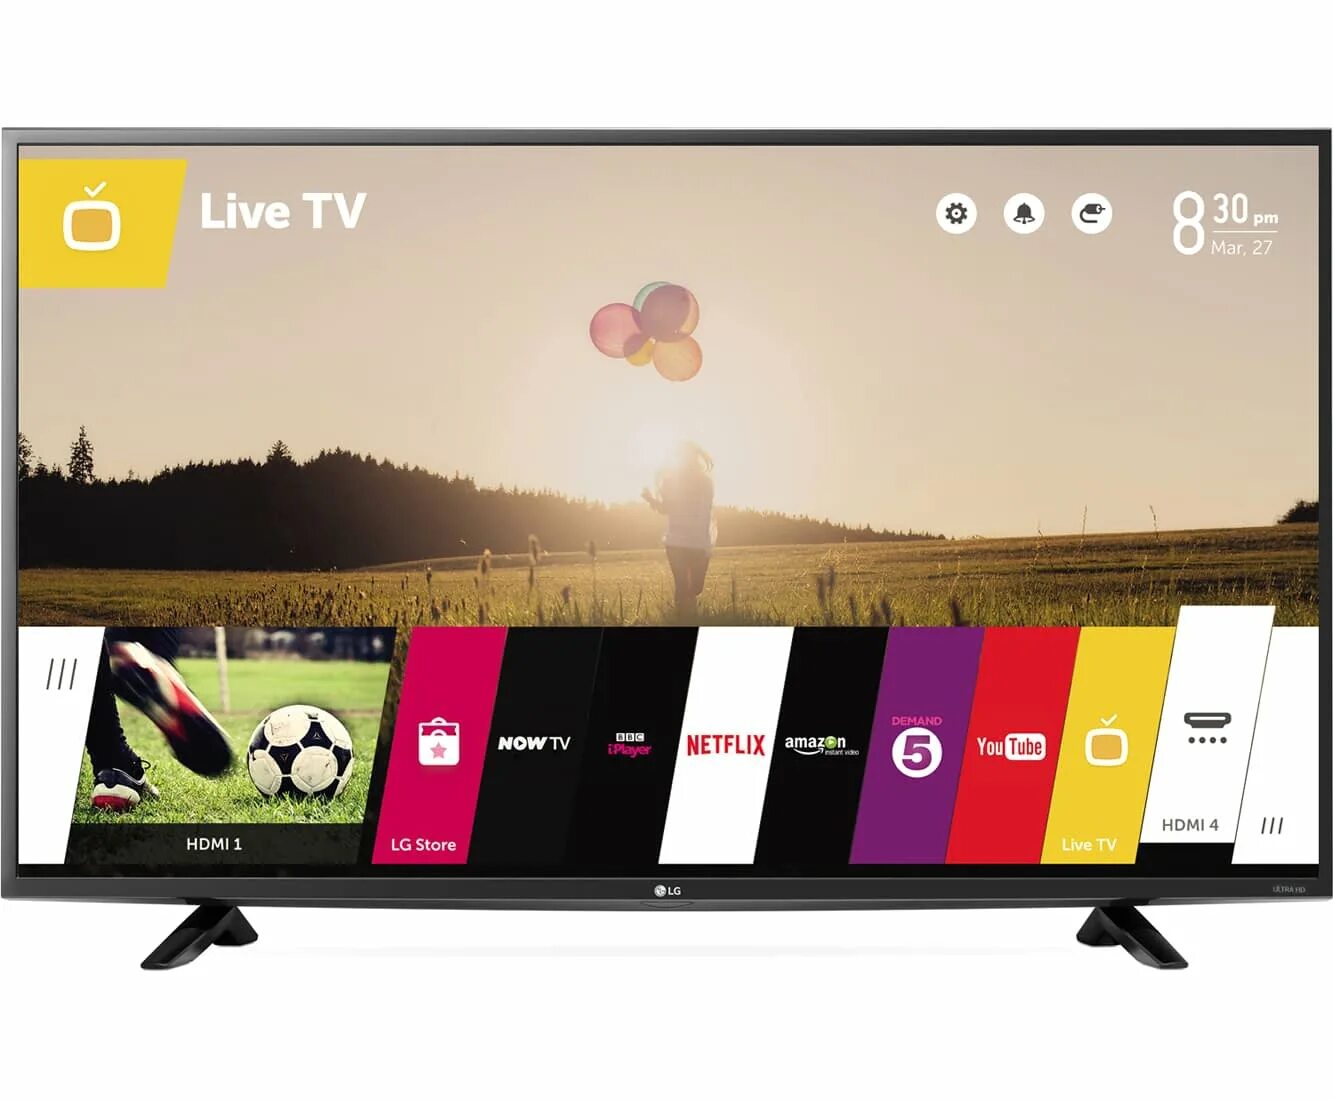 Рейтинг телевизоров lg. Телевизор LG 49lf630v 49" (2015). LG 43uf640v. Телевизор LG 43lf630v 43" (2015). WEBOS телевизор LG 32.